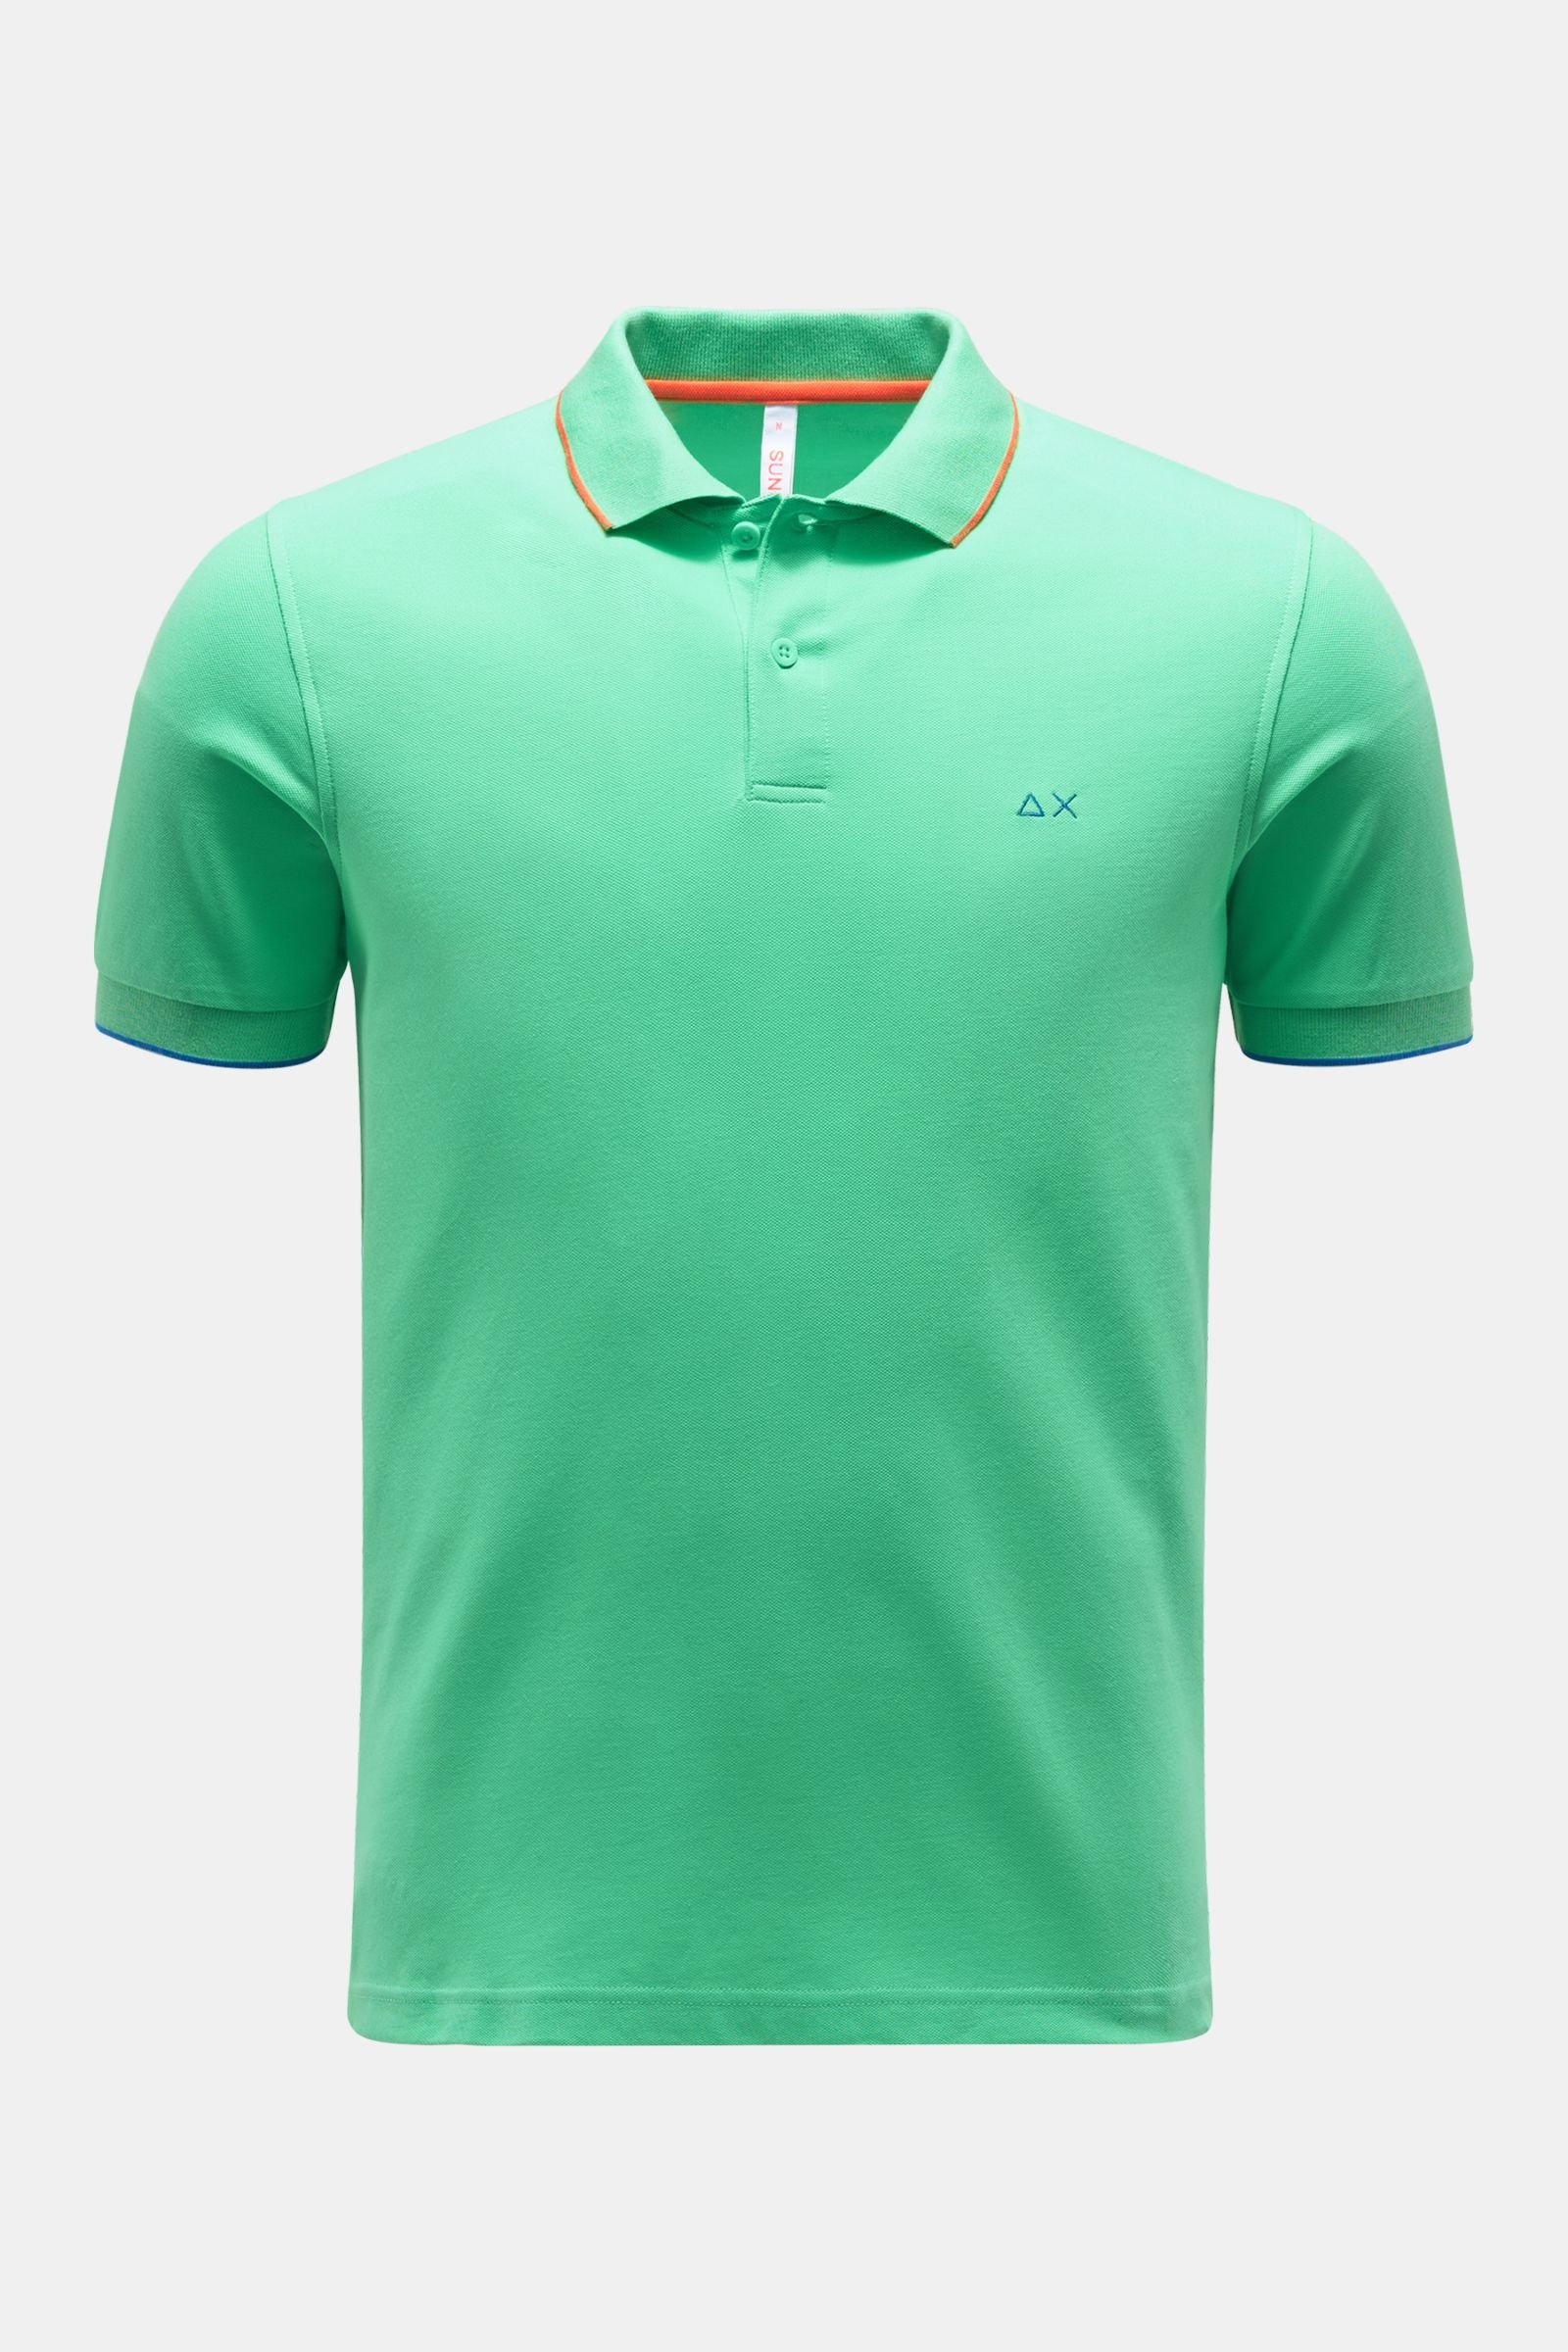 Polo shirt light green